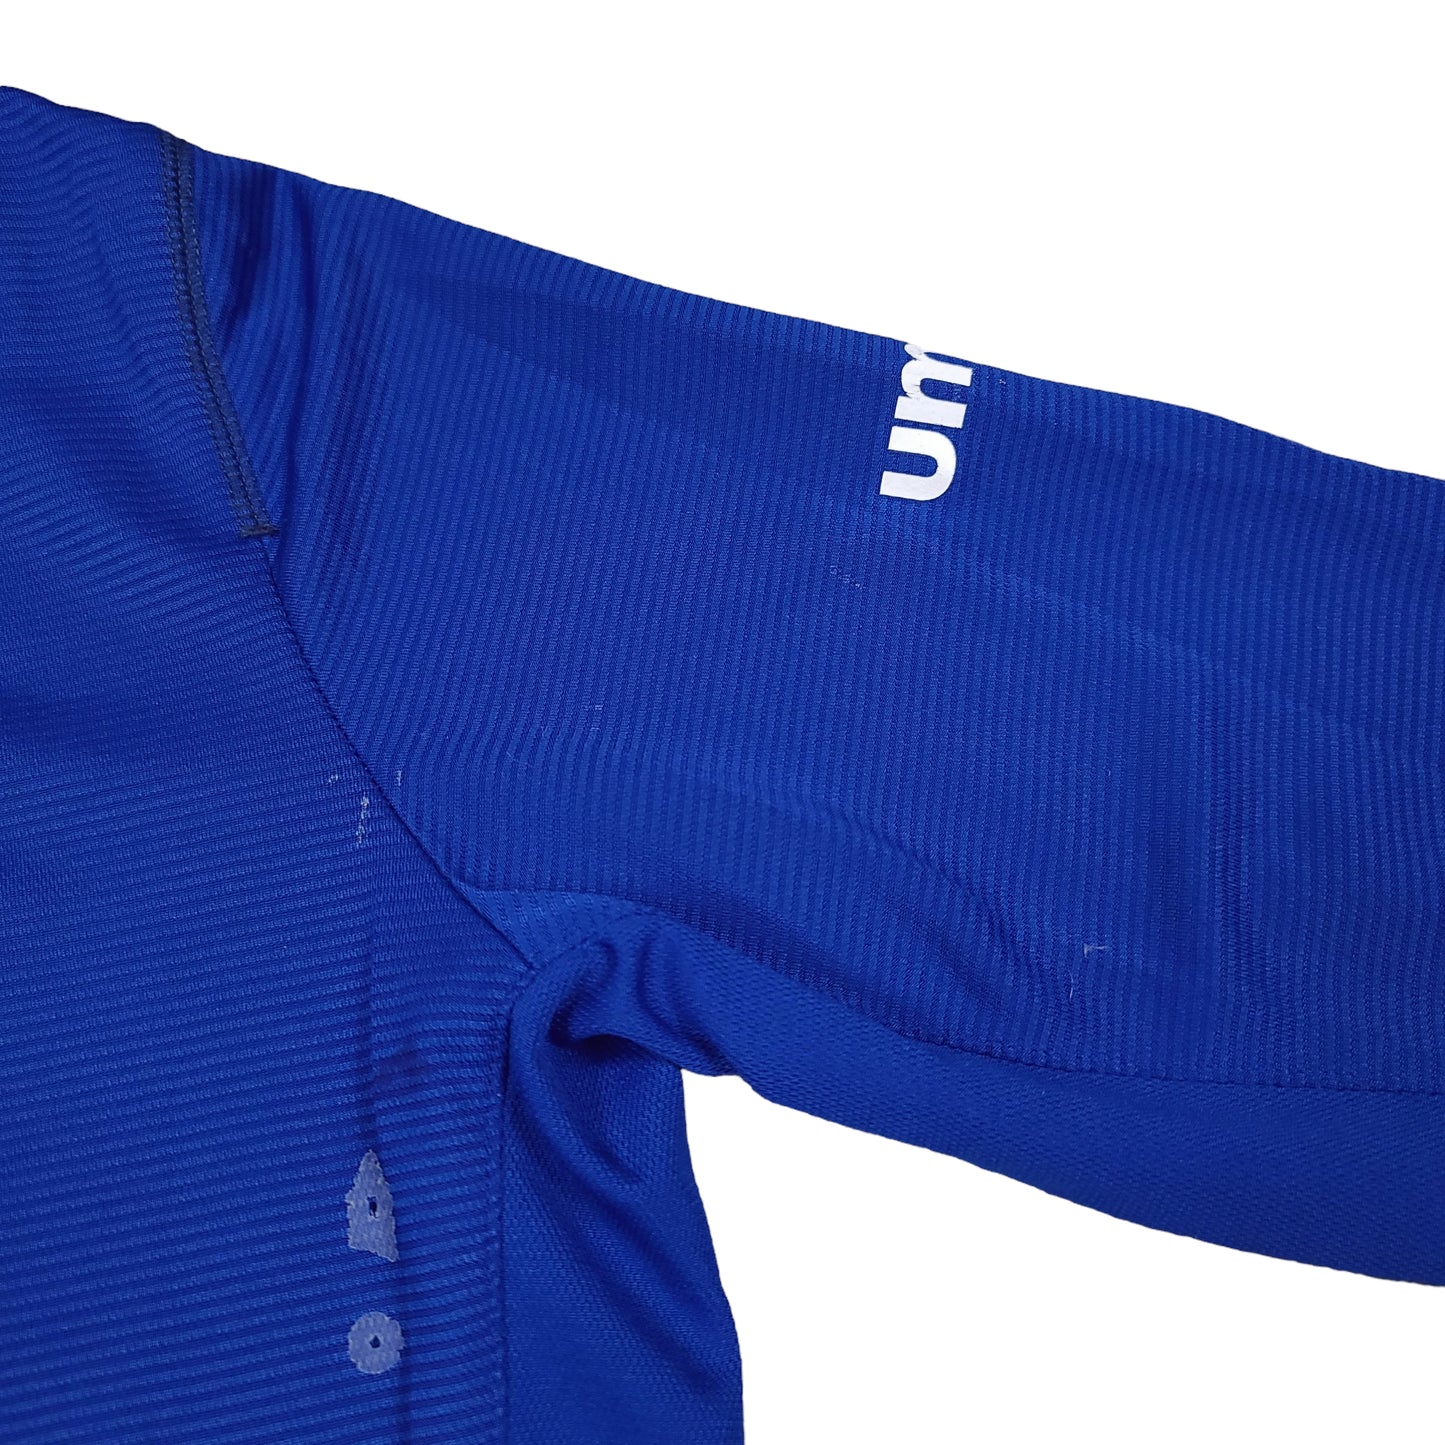 Everton 2014-25 Blue Umbro Long Sleeve Soccer Jersey